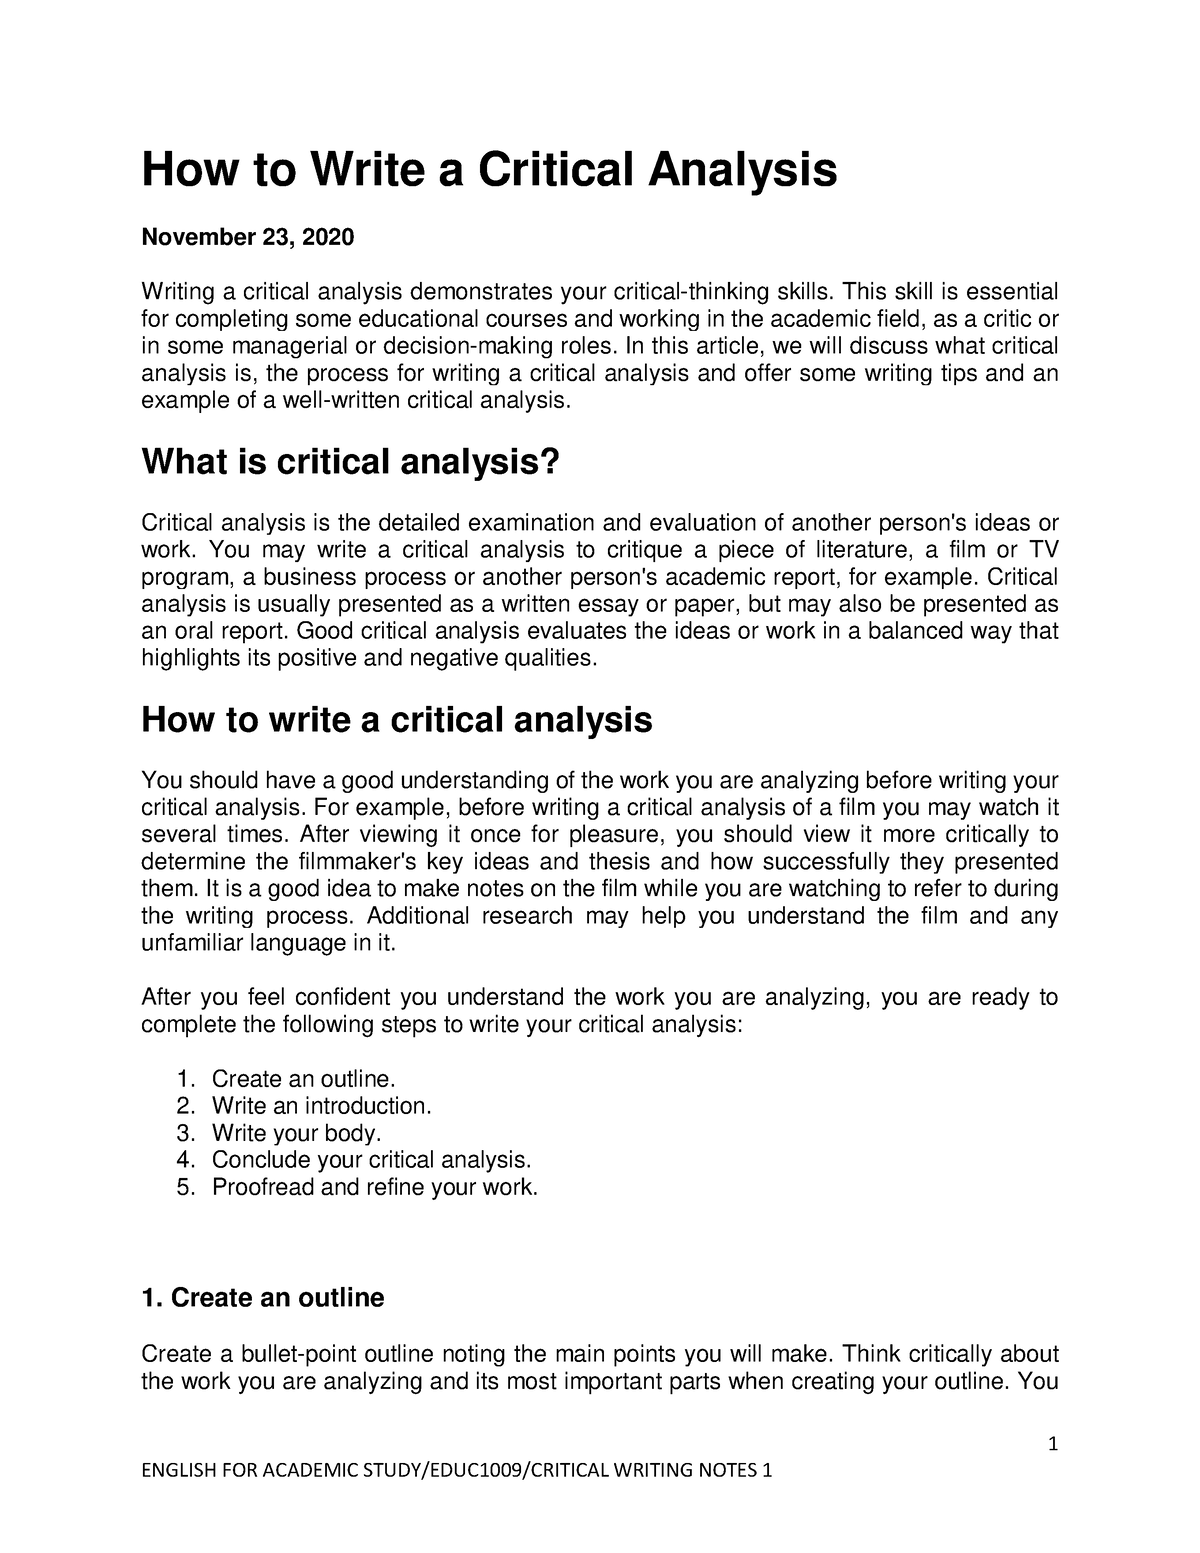 How to write a critical analysis - BibGuru Blog